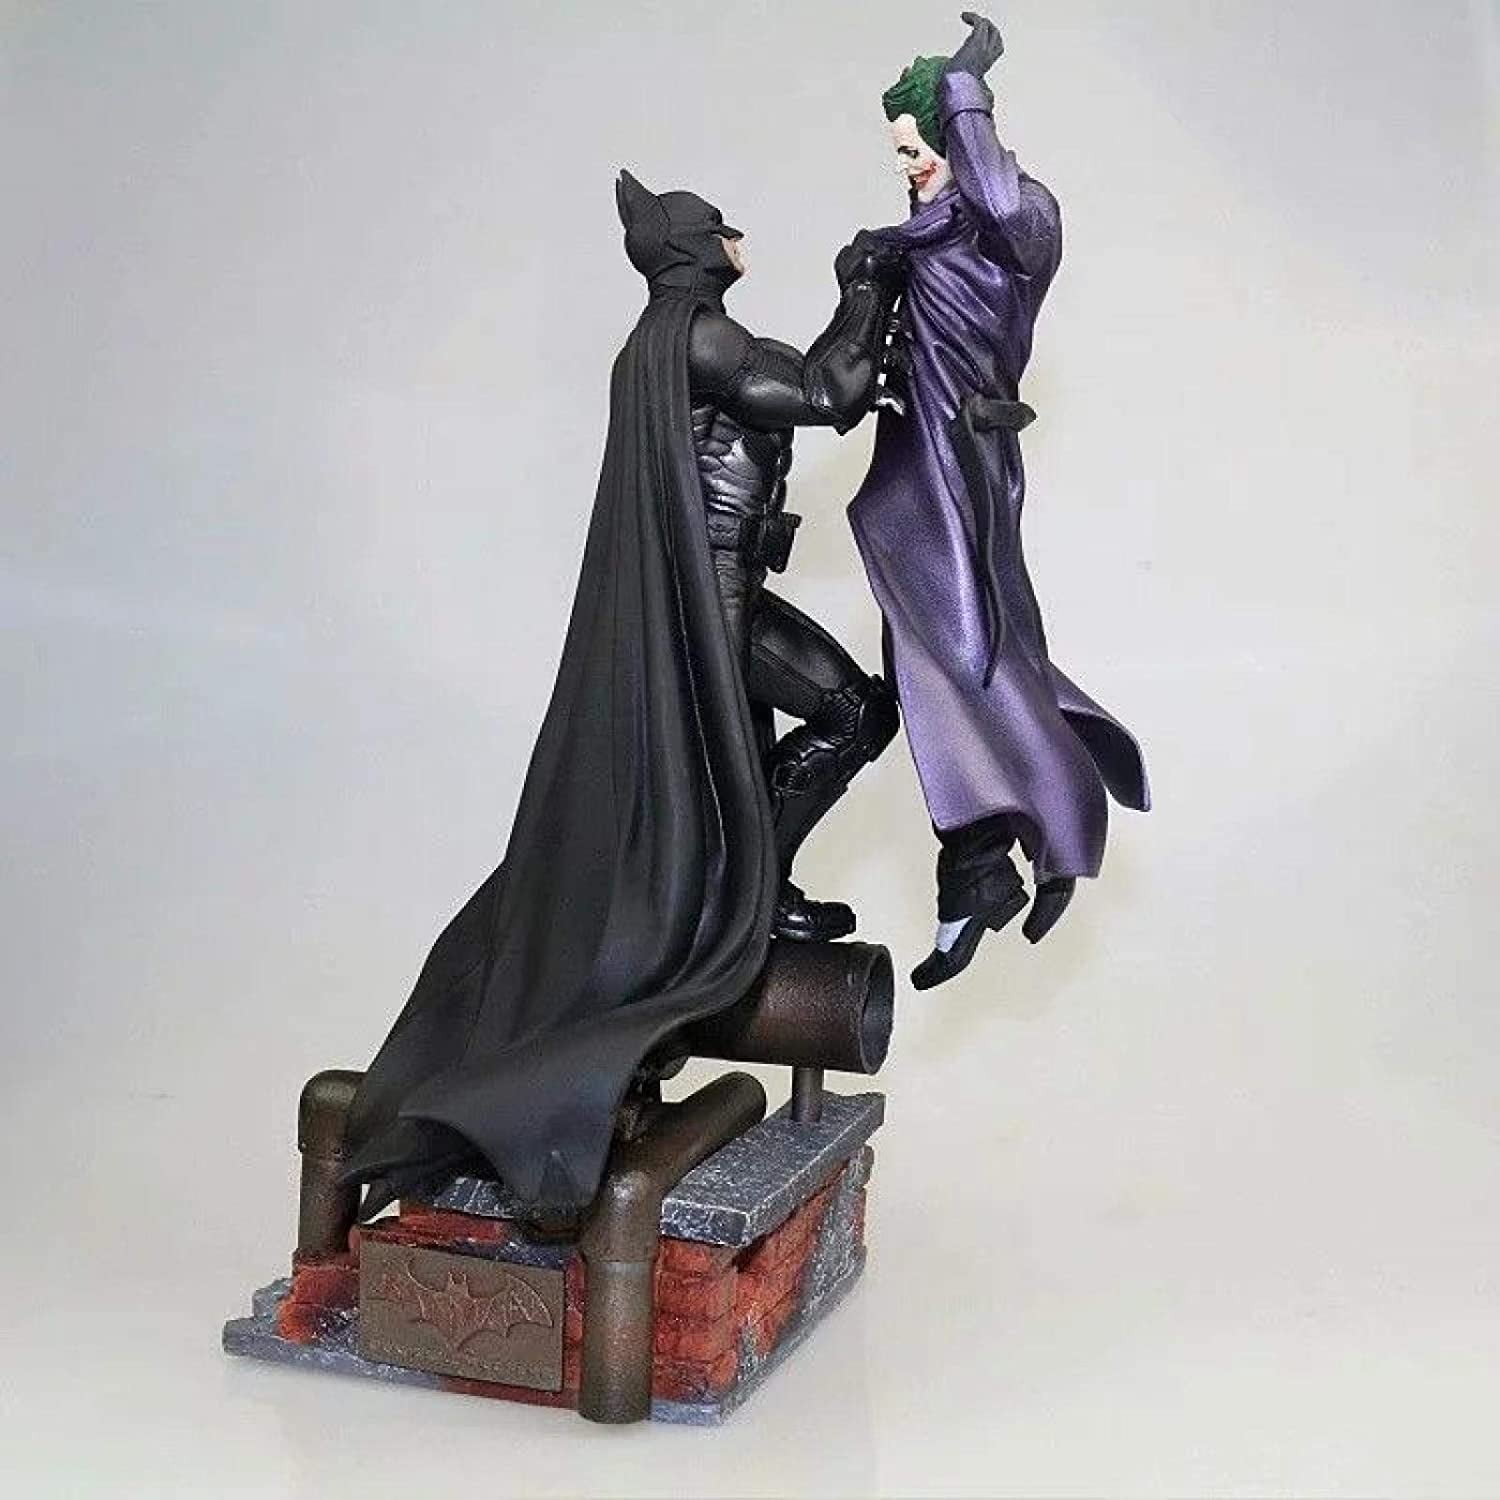 Batman Vs Joker Statue Action Figure Toy Model Toys Anime Batman Joker Figurine